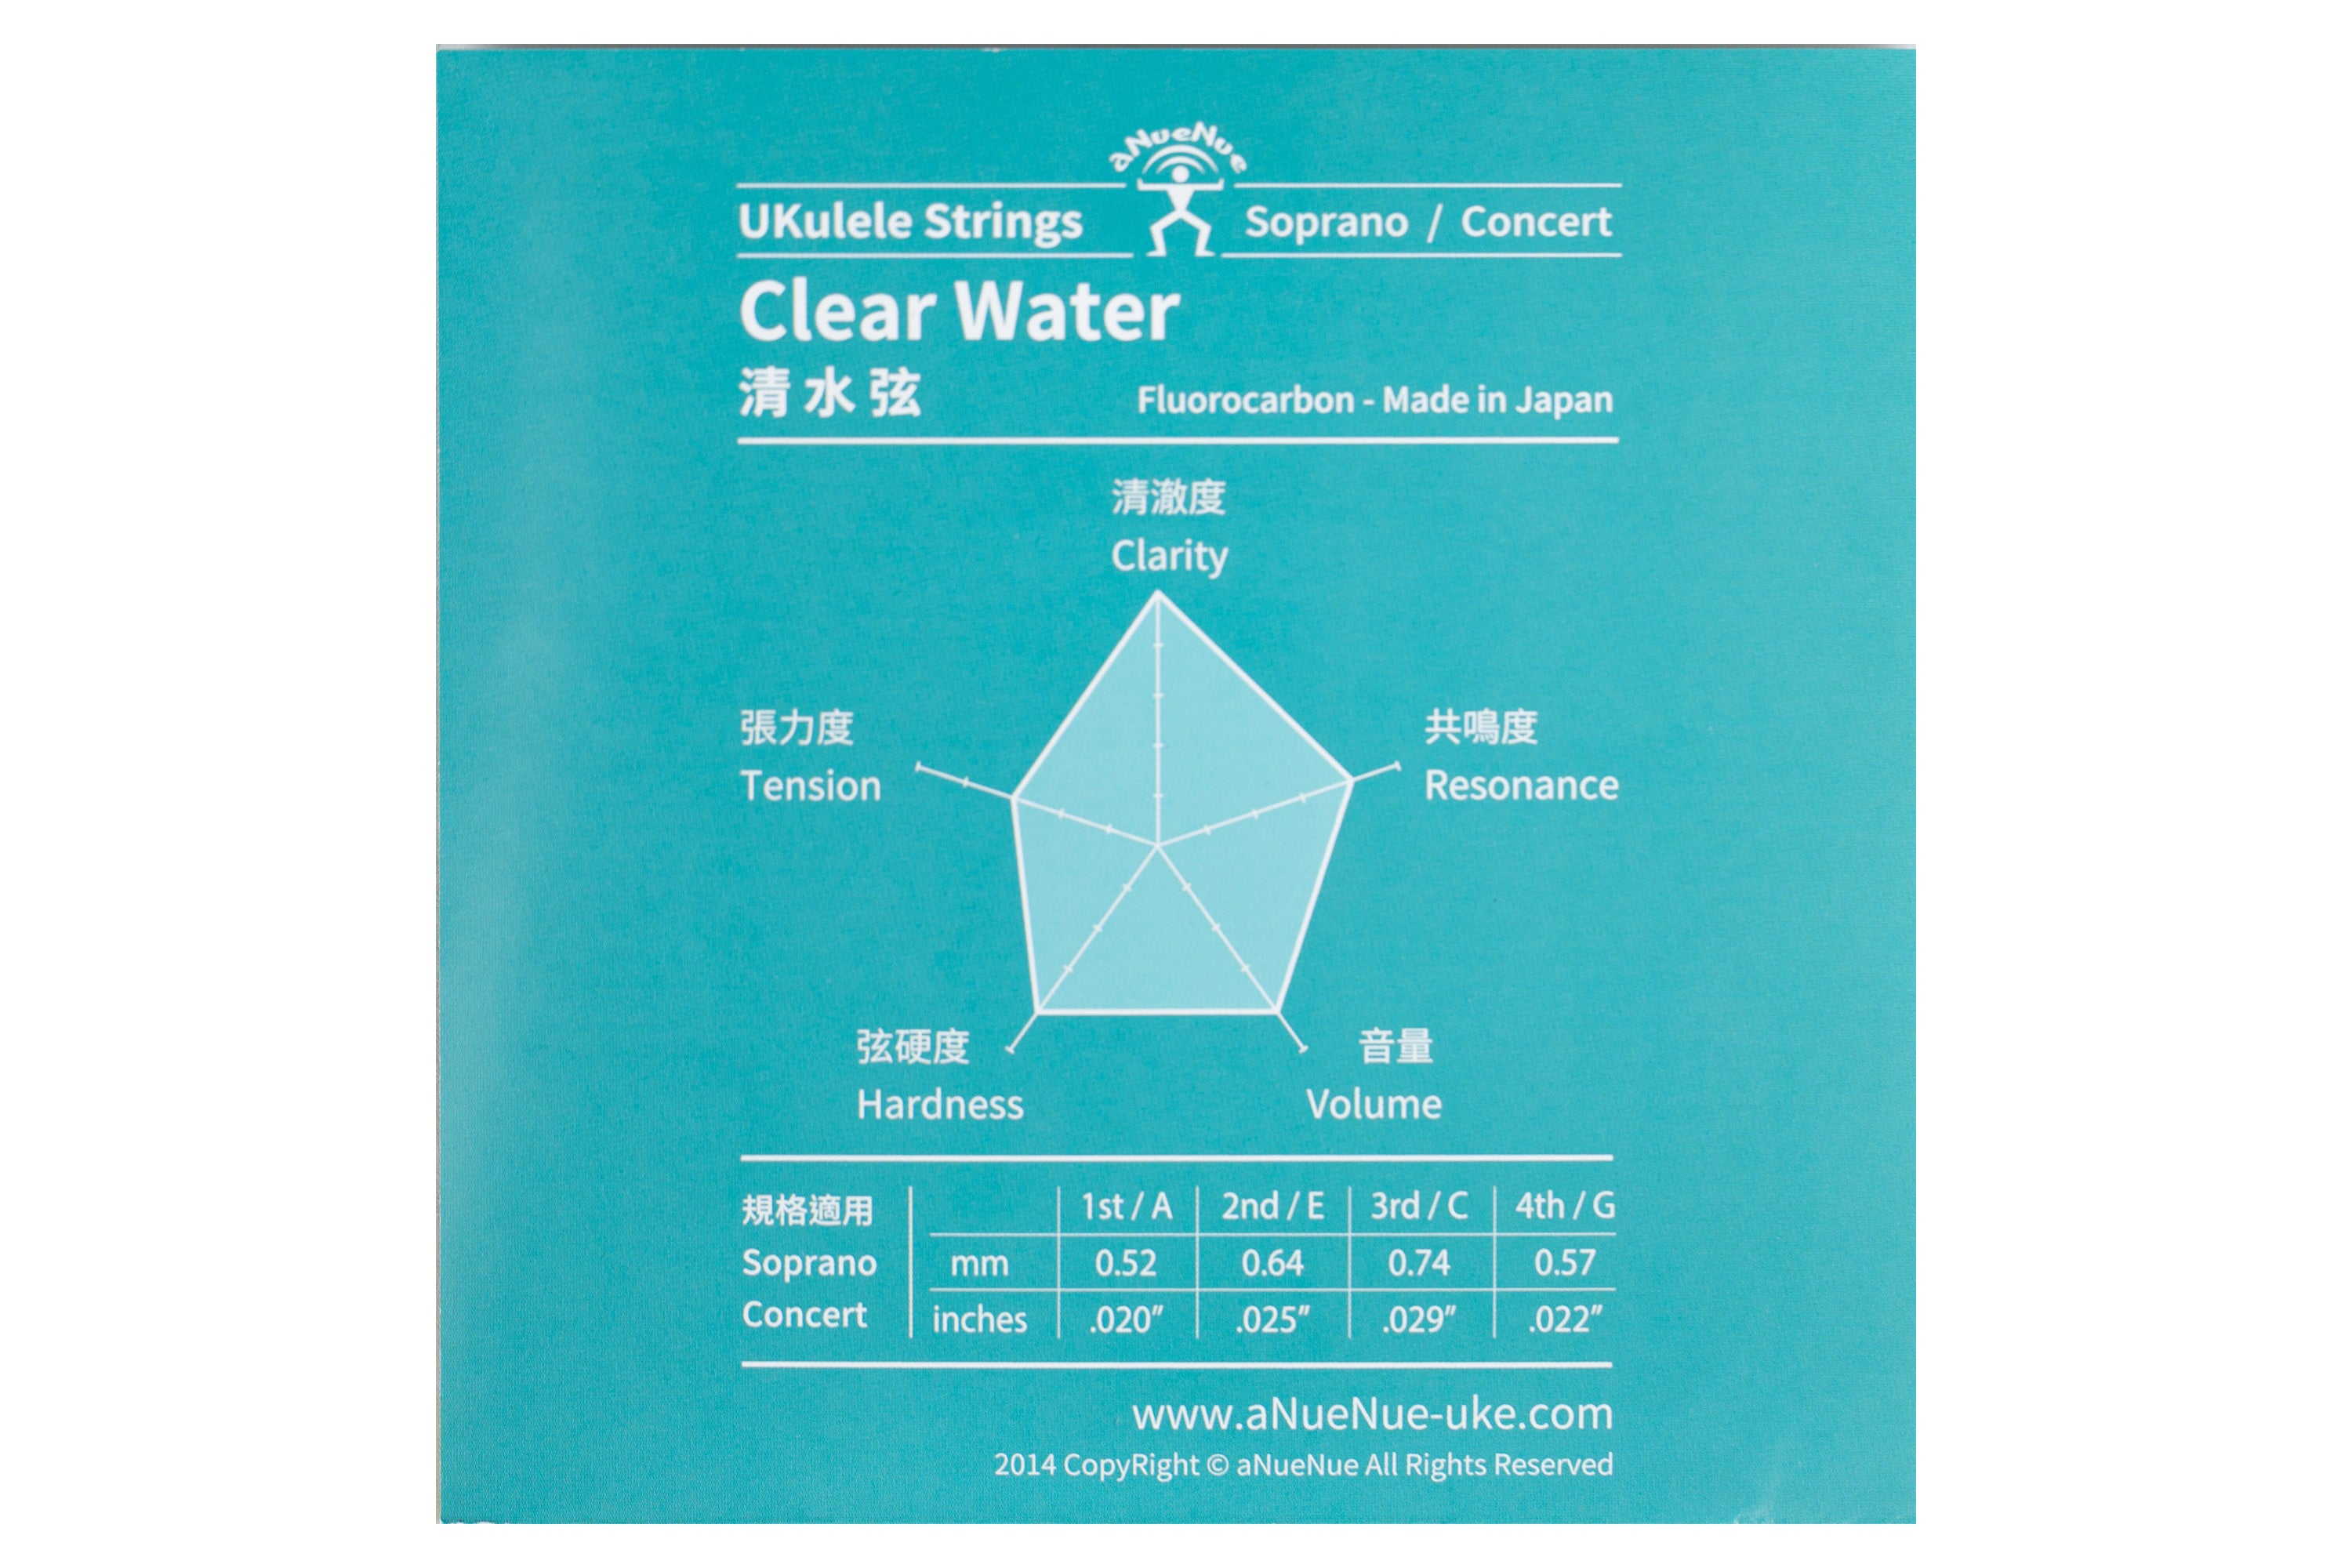 Anuenue CWSC - Clear Water Strings - Soprano/Concert Ukulele Strings